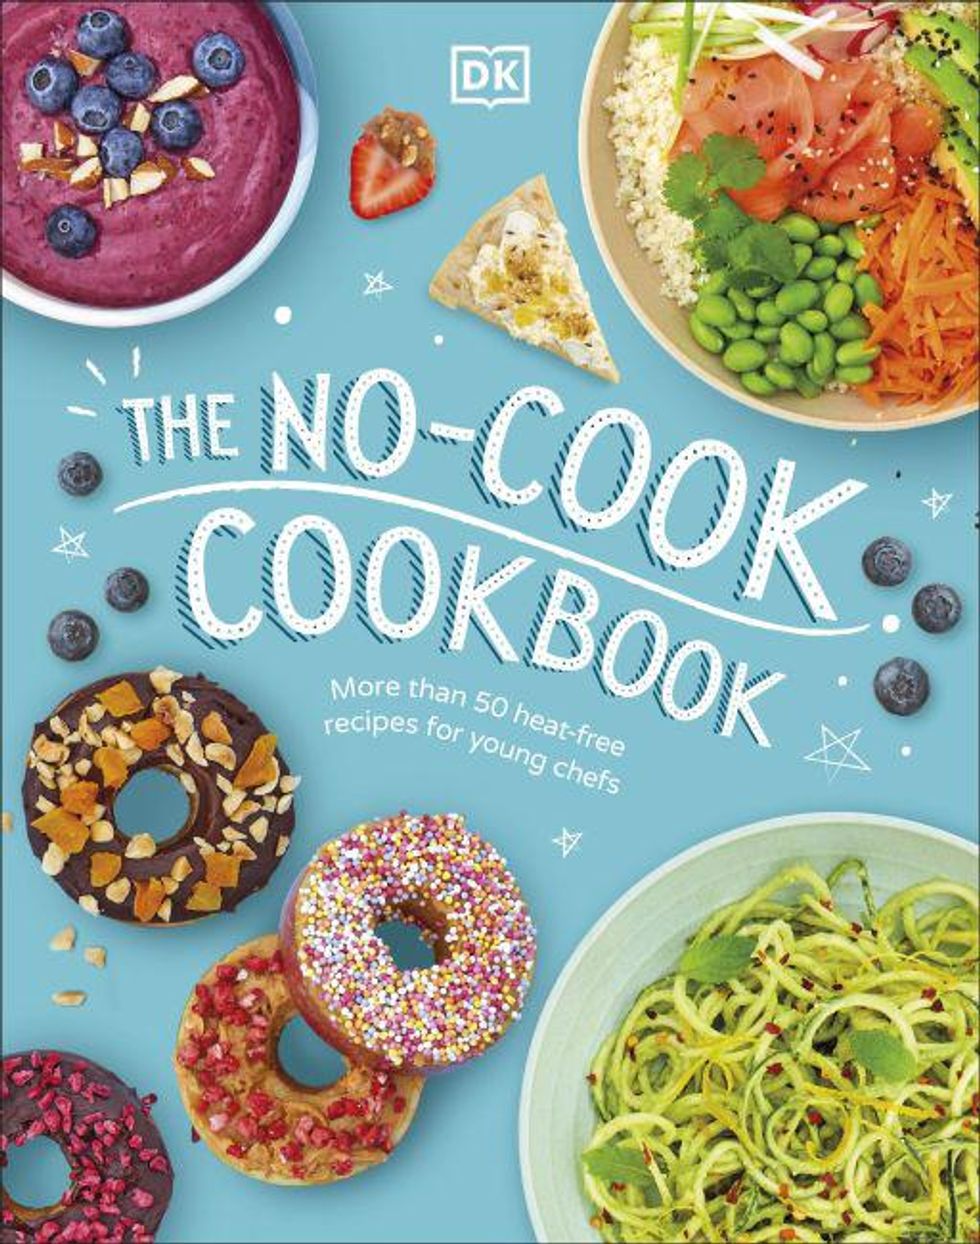 Family-friendly cookbooks